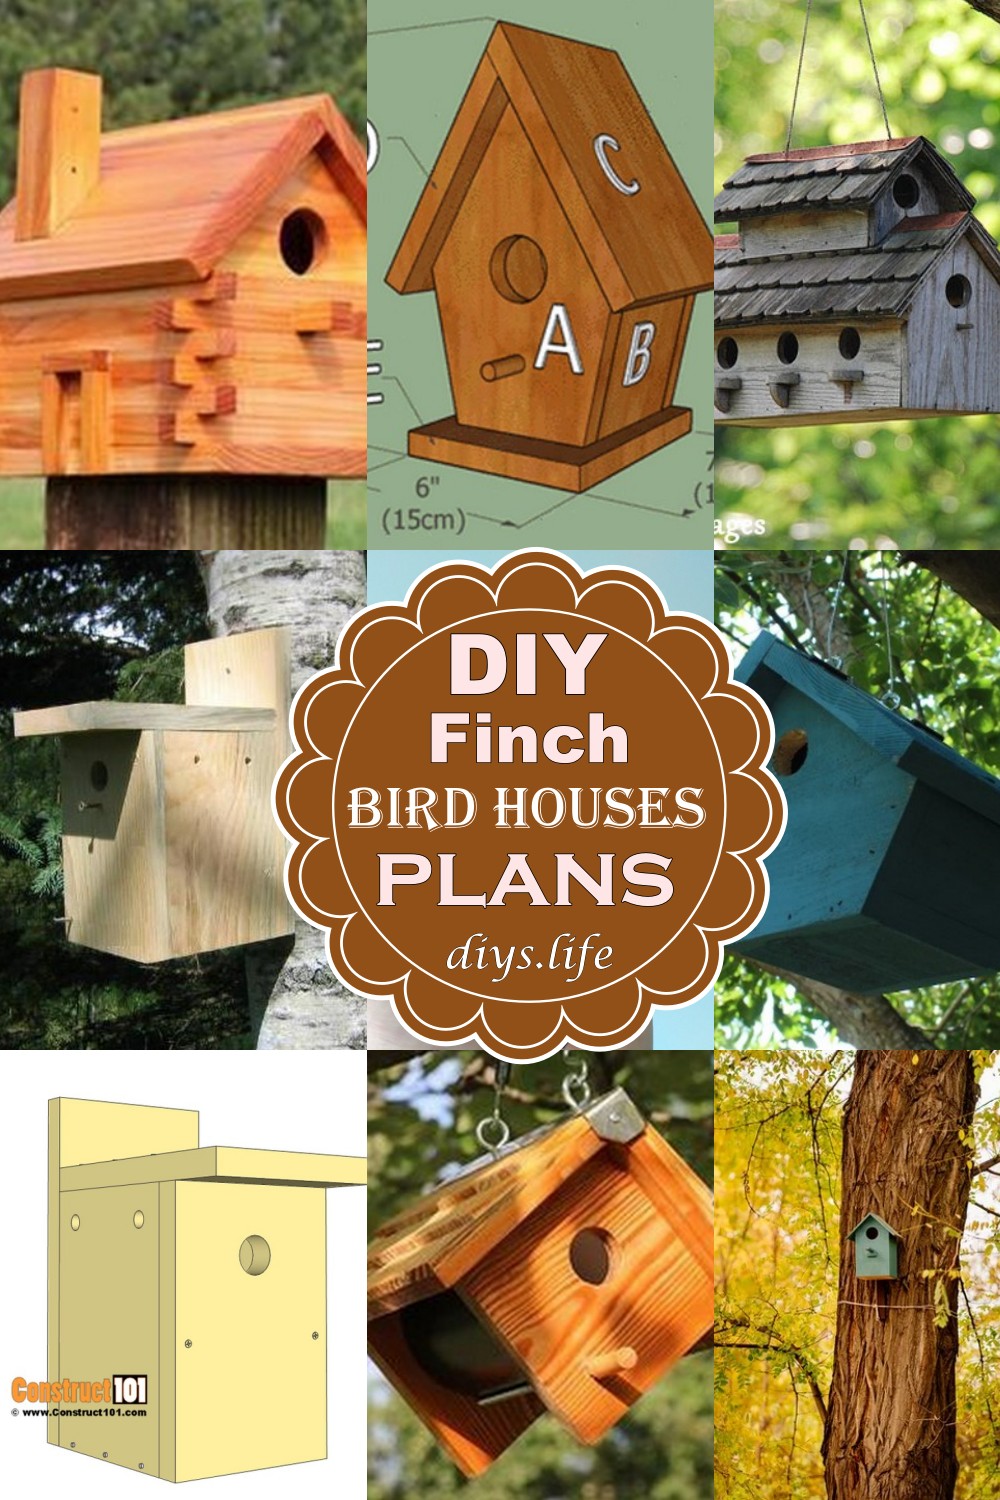 DIY Finch Bird Houses